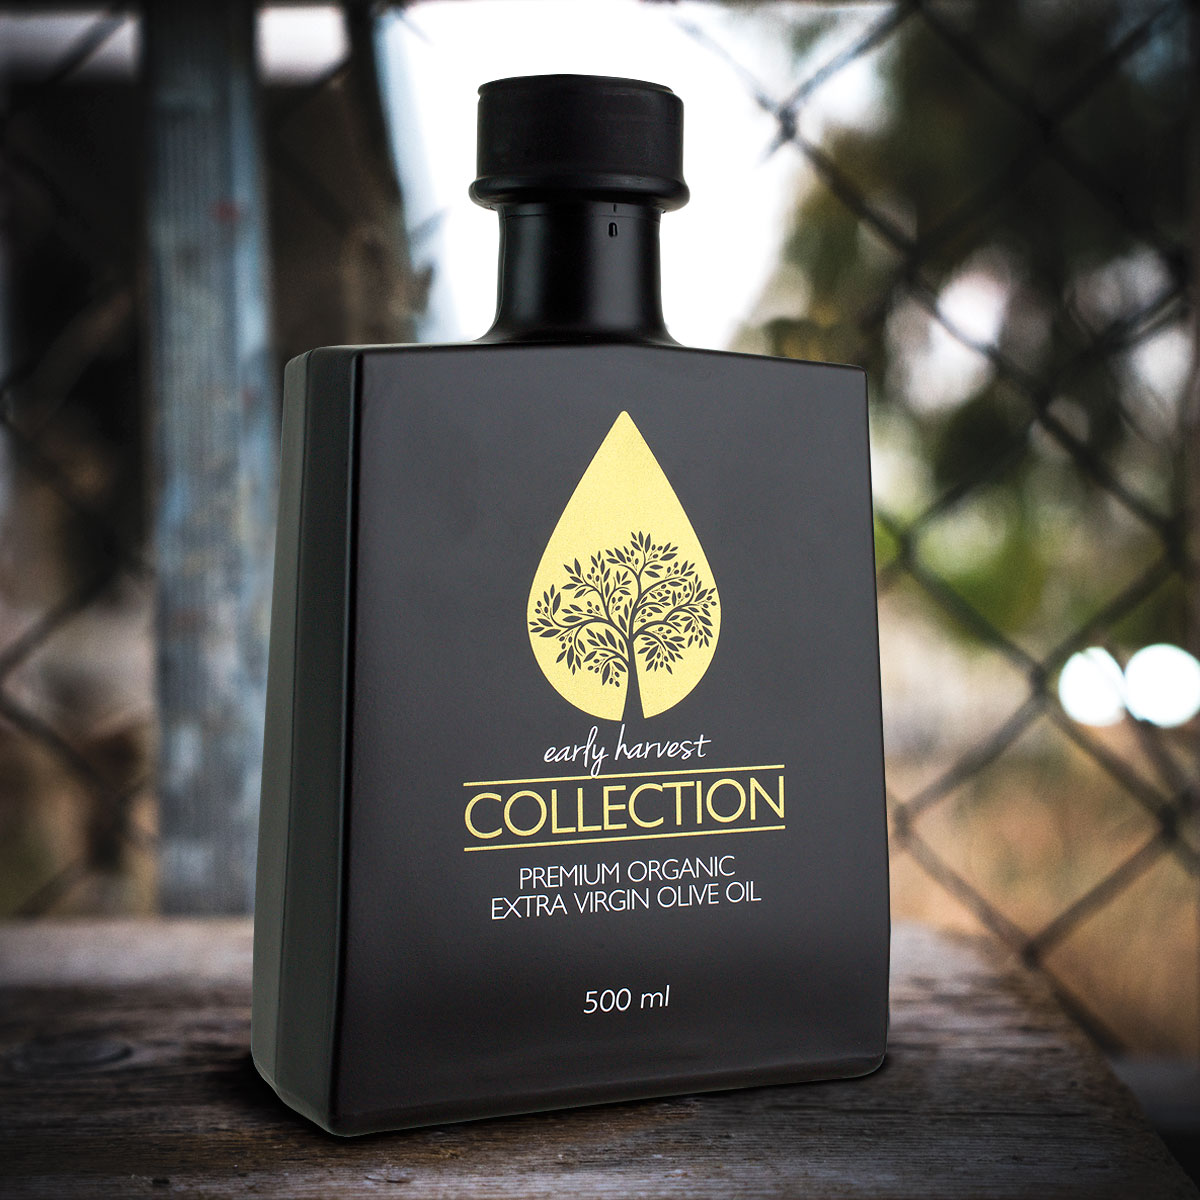 Kydonakis Bros, "COLLECTION" Premium Organic Extra Virgin Olive Oil